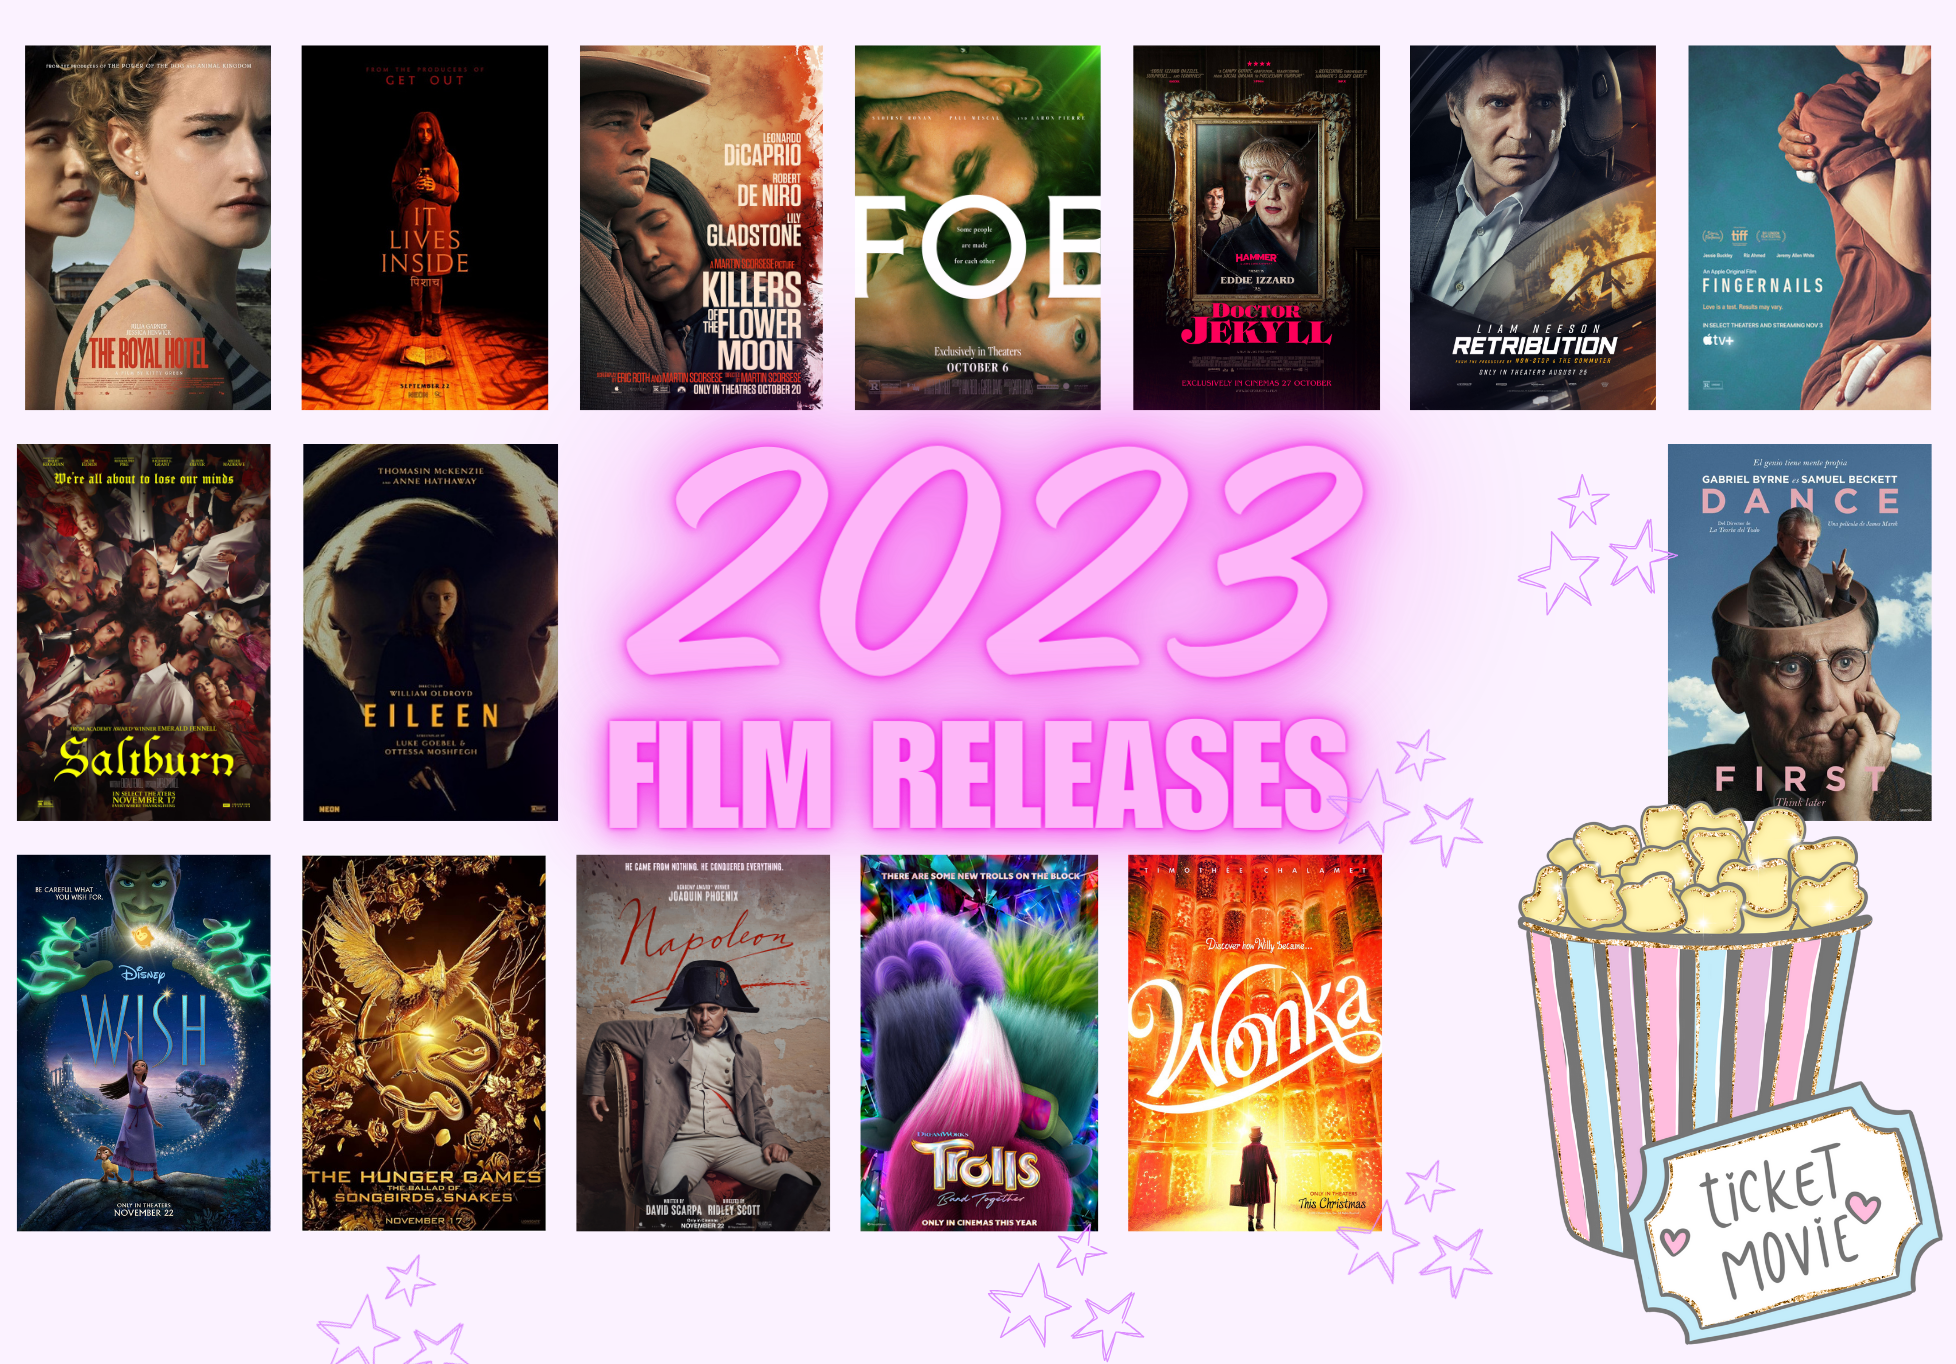 2023 film releases - October, November and December